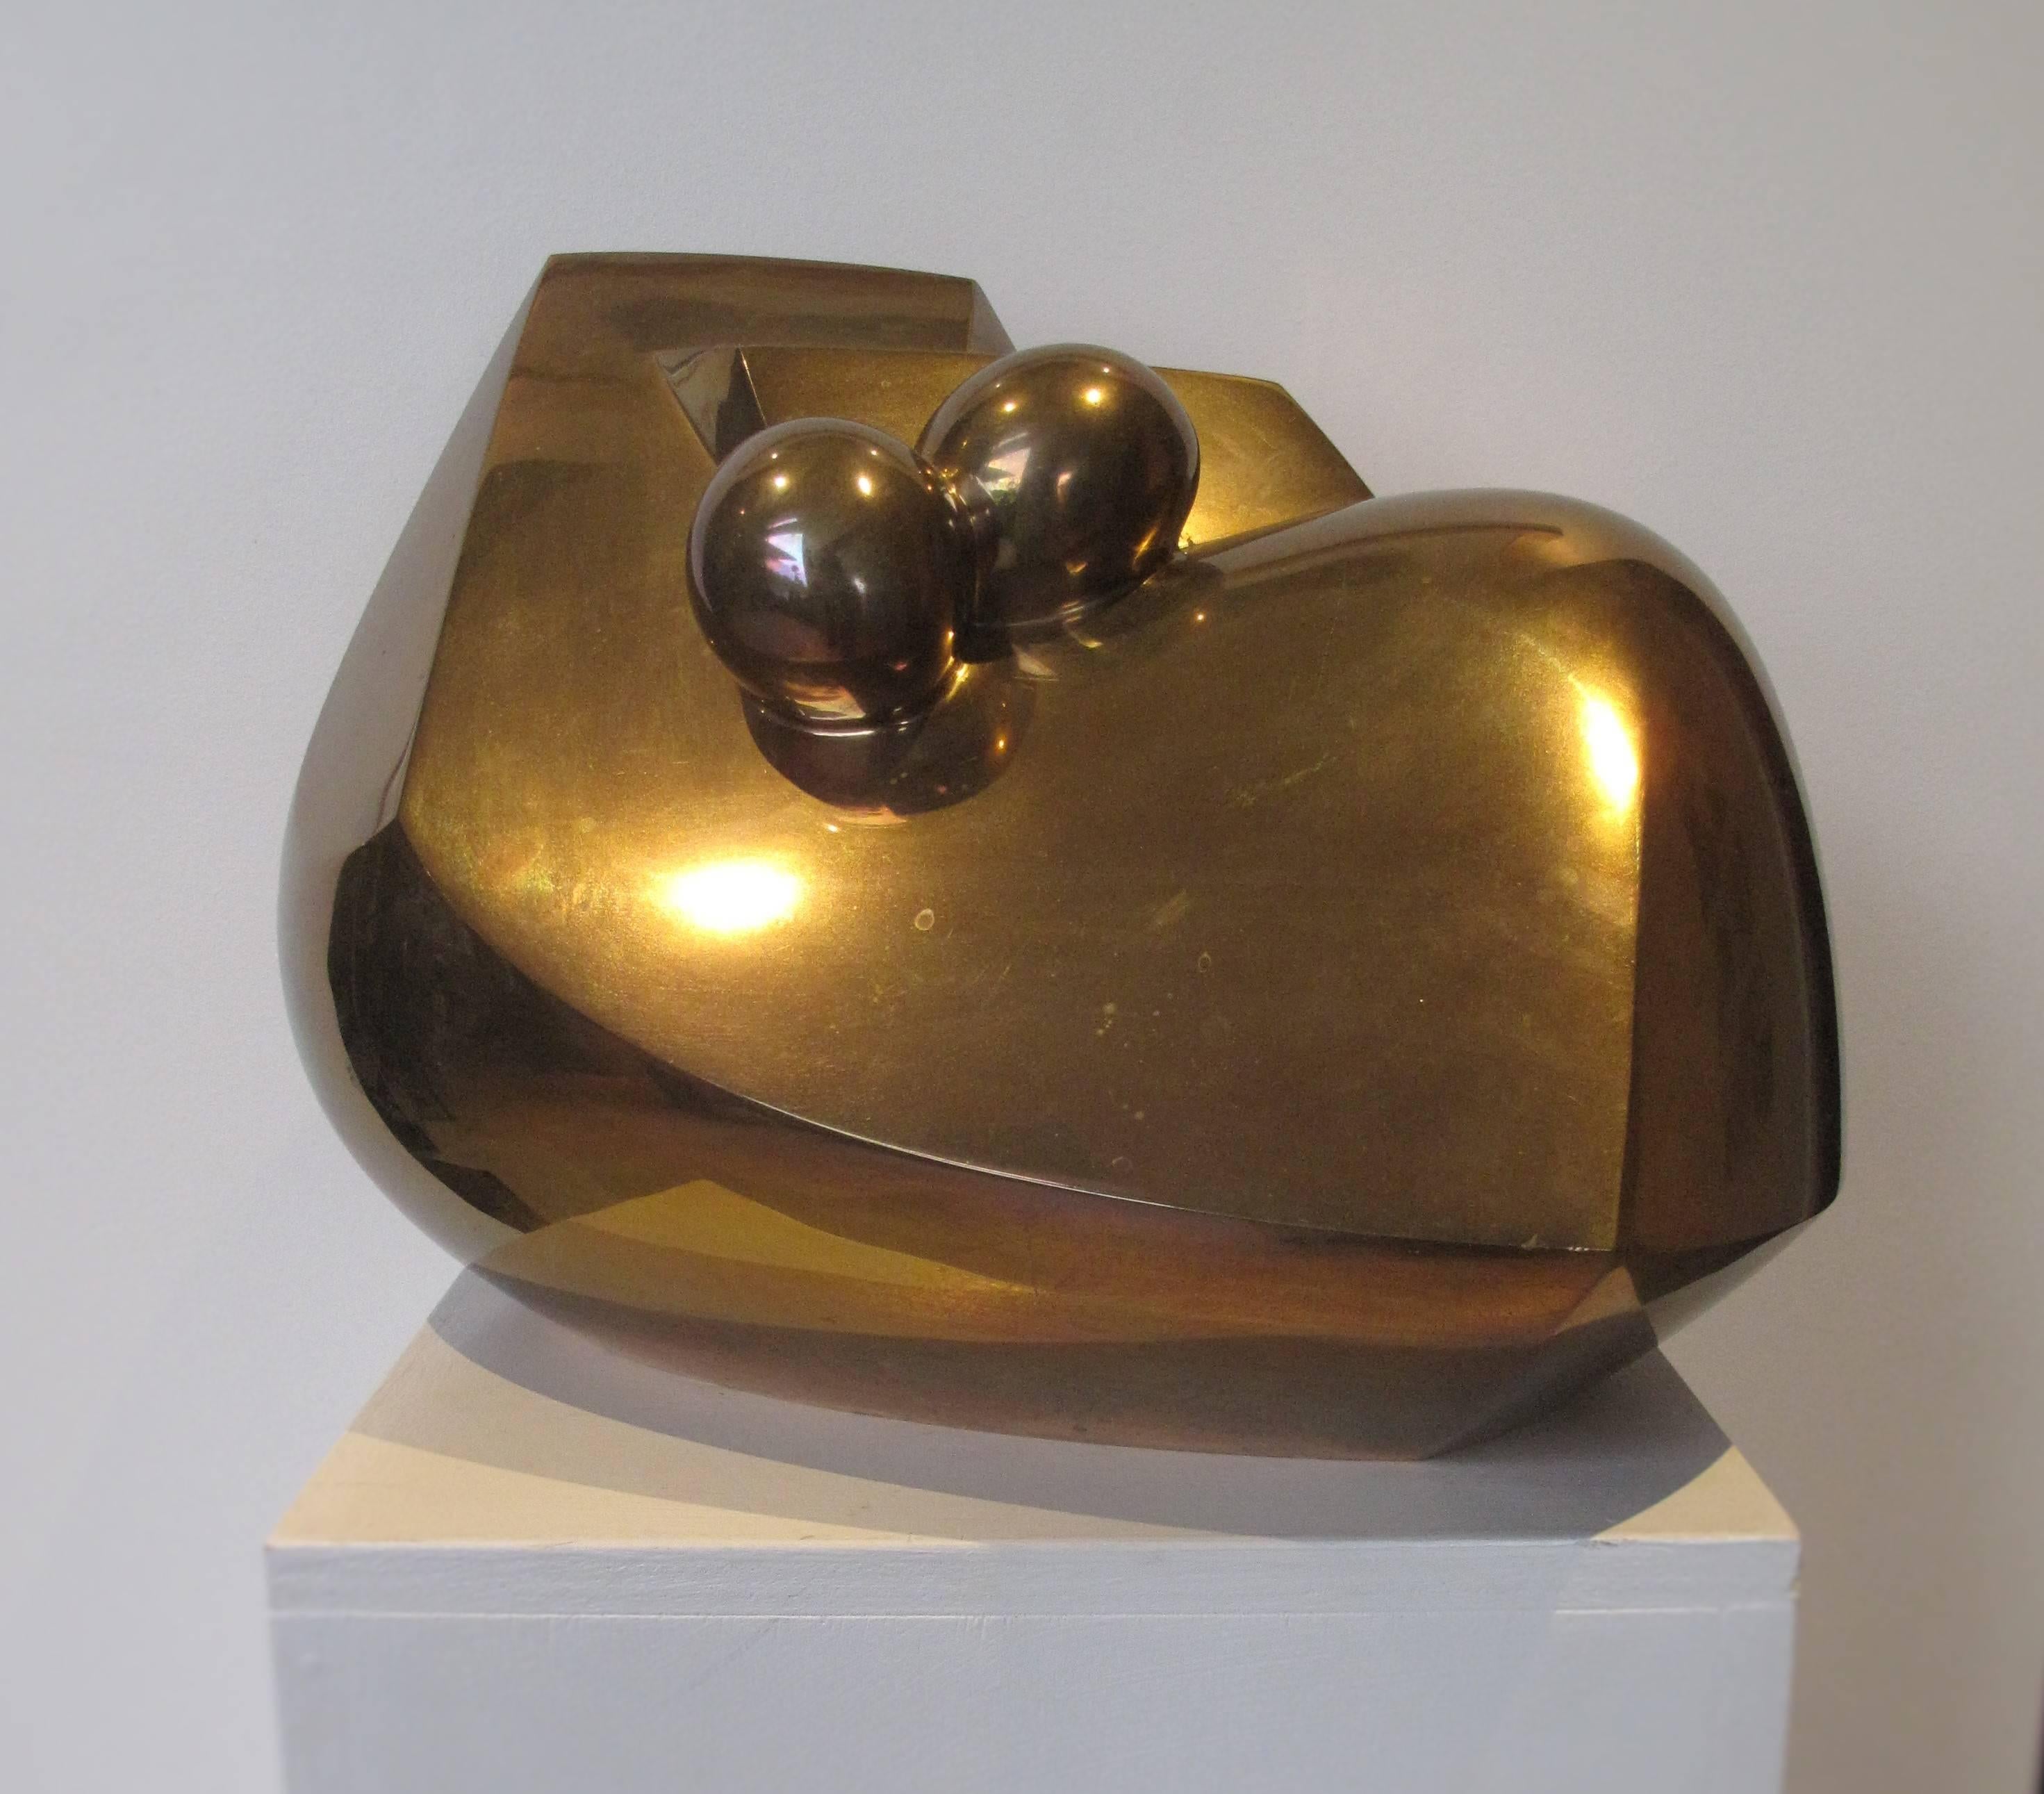 Emile Gilioli (1911-1977)
La dormeuse, 1946-1962
Bronze poli

Fondeur TEP
39 x 60 x 38 cm - 15 3/8 x 23 5/8 x 15 in.
Polished bronze
Signed and numbered  0/3

Expositions :
Paris, Musée National d'Art Moderne-Centre Pompidou, Gilioli, du